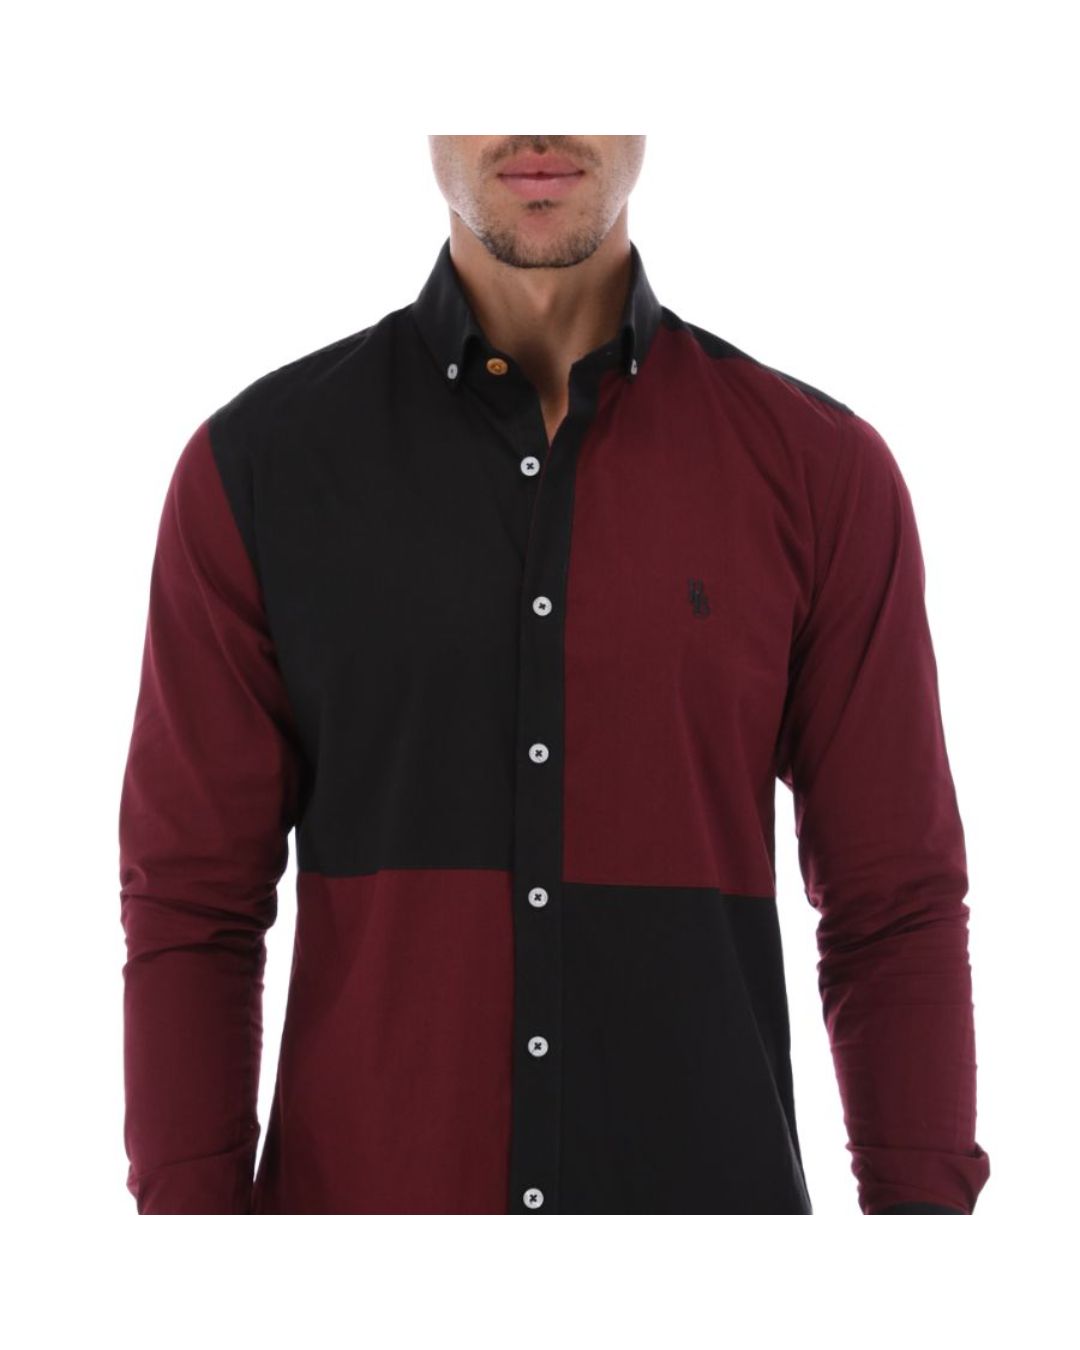 Men's Patchwork Long Sleeve Button Down Shirt Burgundy & Black